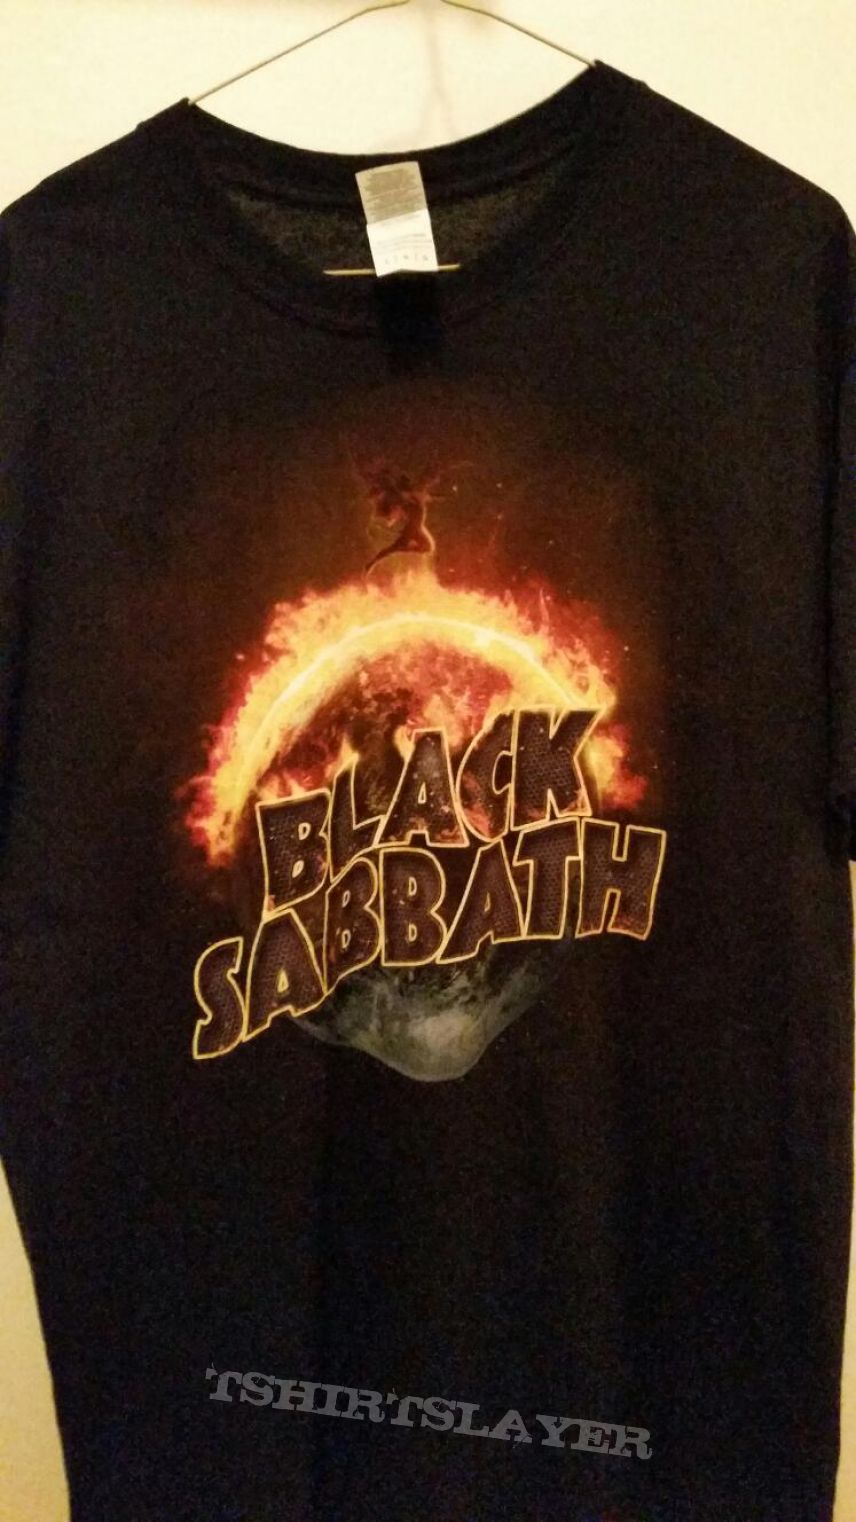 Black Sabbath- The End 2016 tour shirt